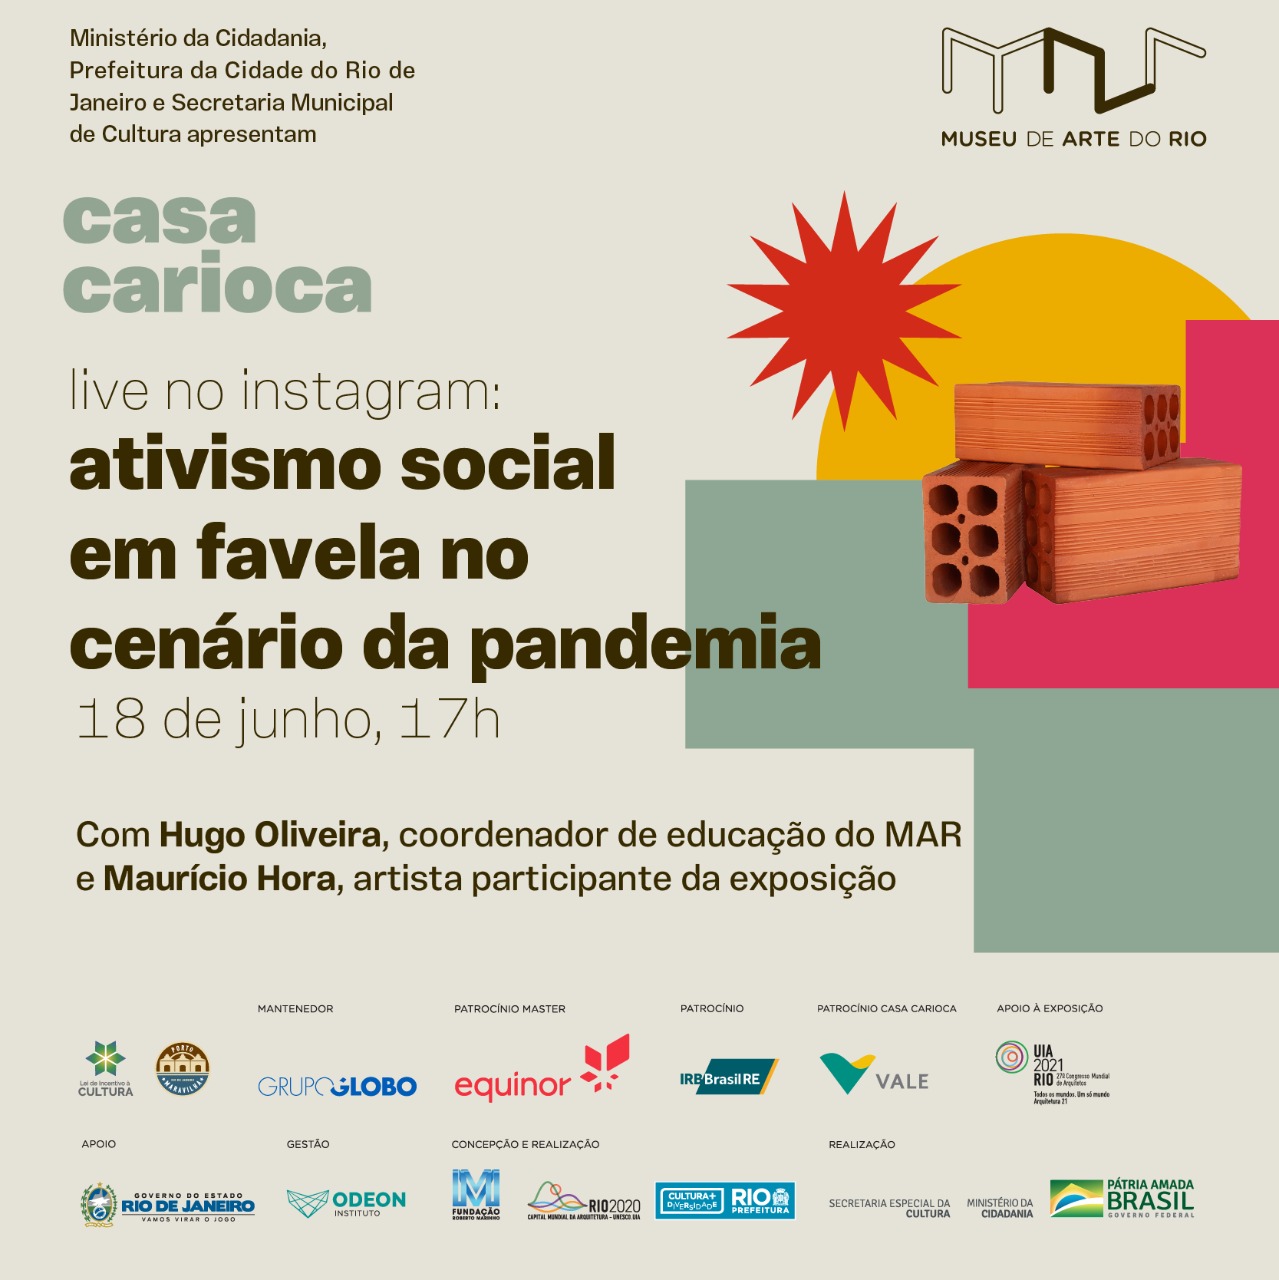 Live - Favela social activism in the pandemic scenario, MAR. Disclosure.